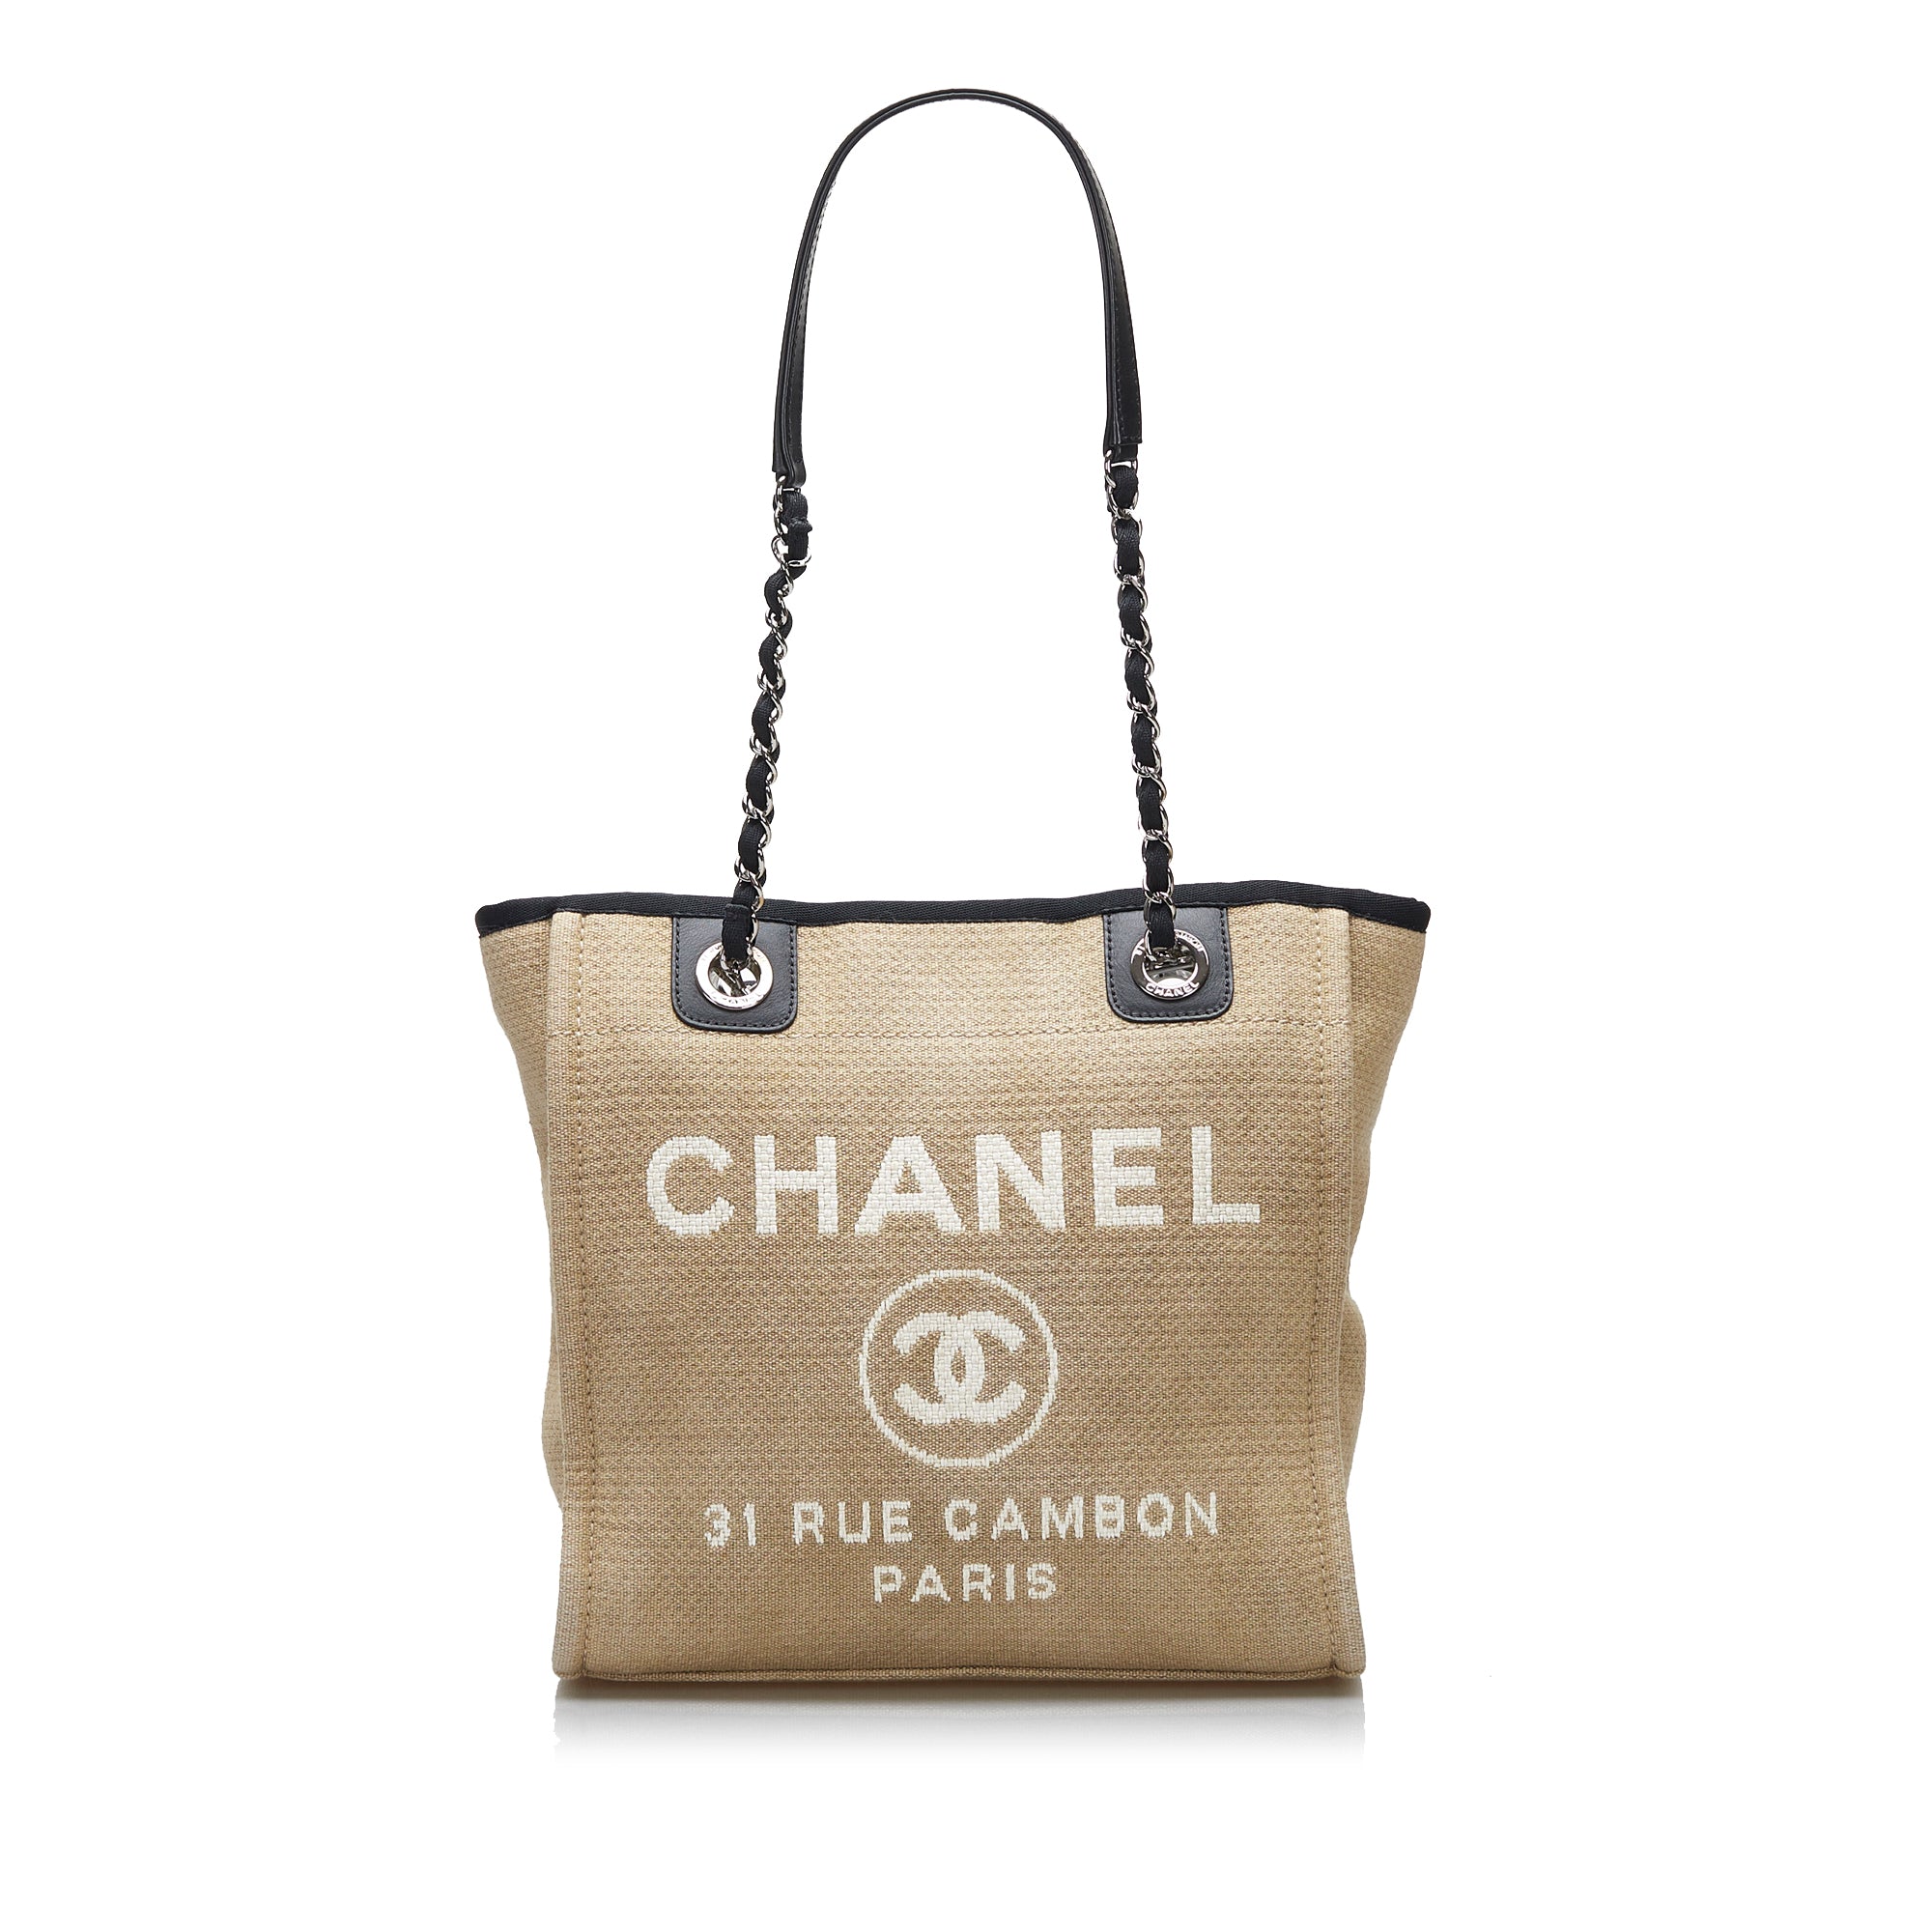 Chanel Deauville VS GST Tote Bag Review / Comparison & OUTFITS